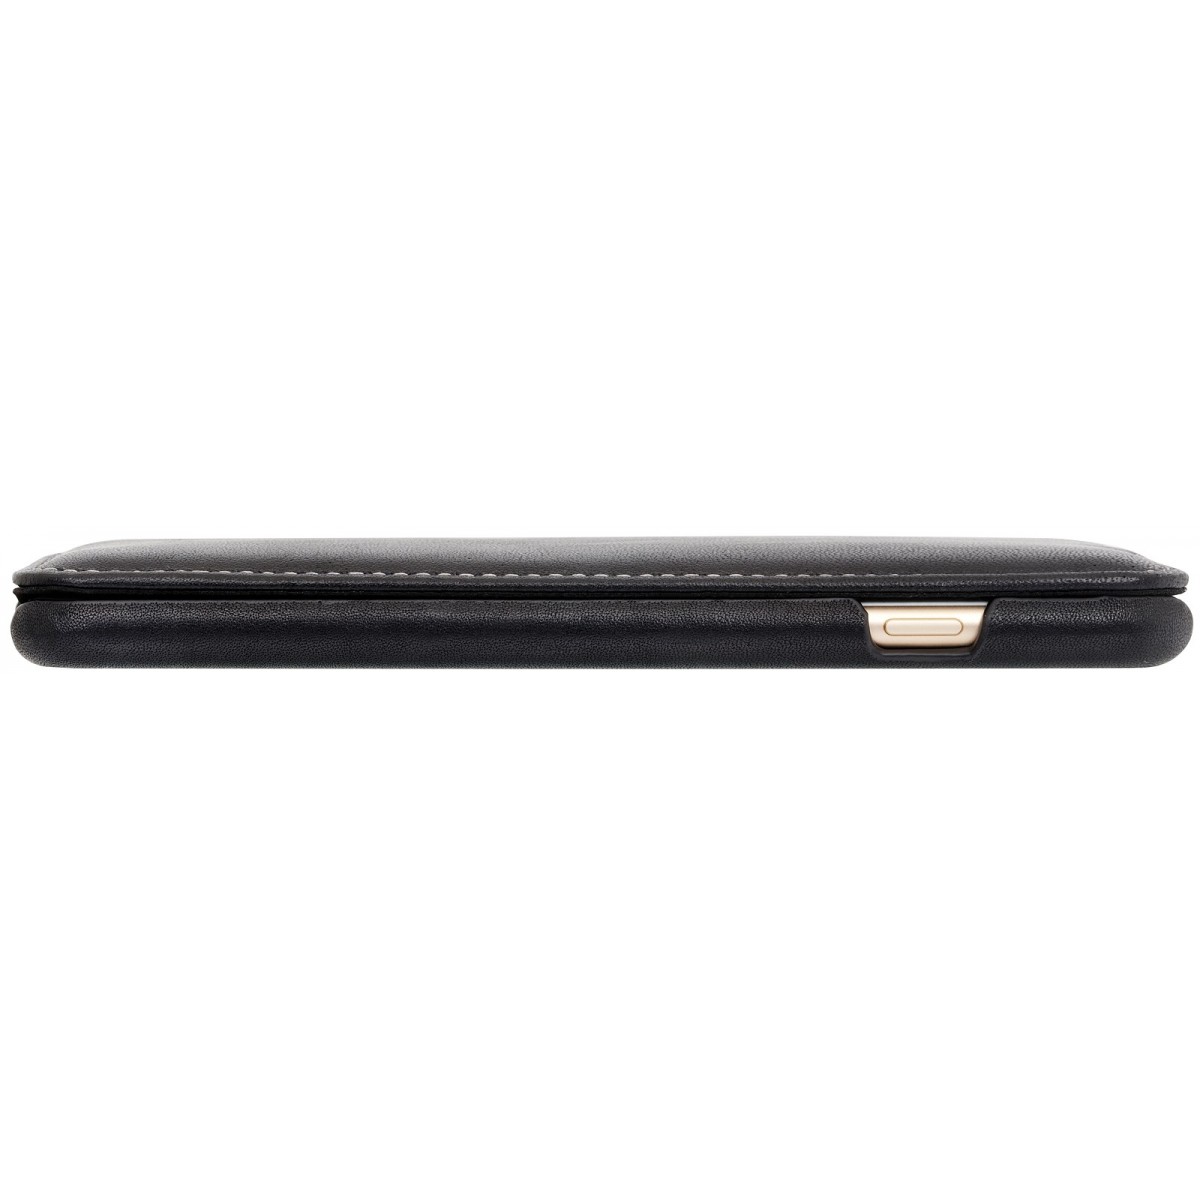 Etui iPhone 7 Plus nappa ultraslim noir nappa en cuir véritable - Stilgut